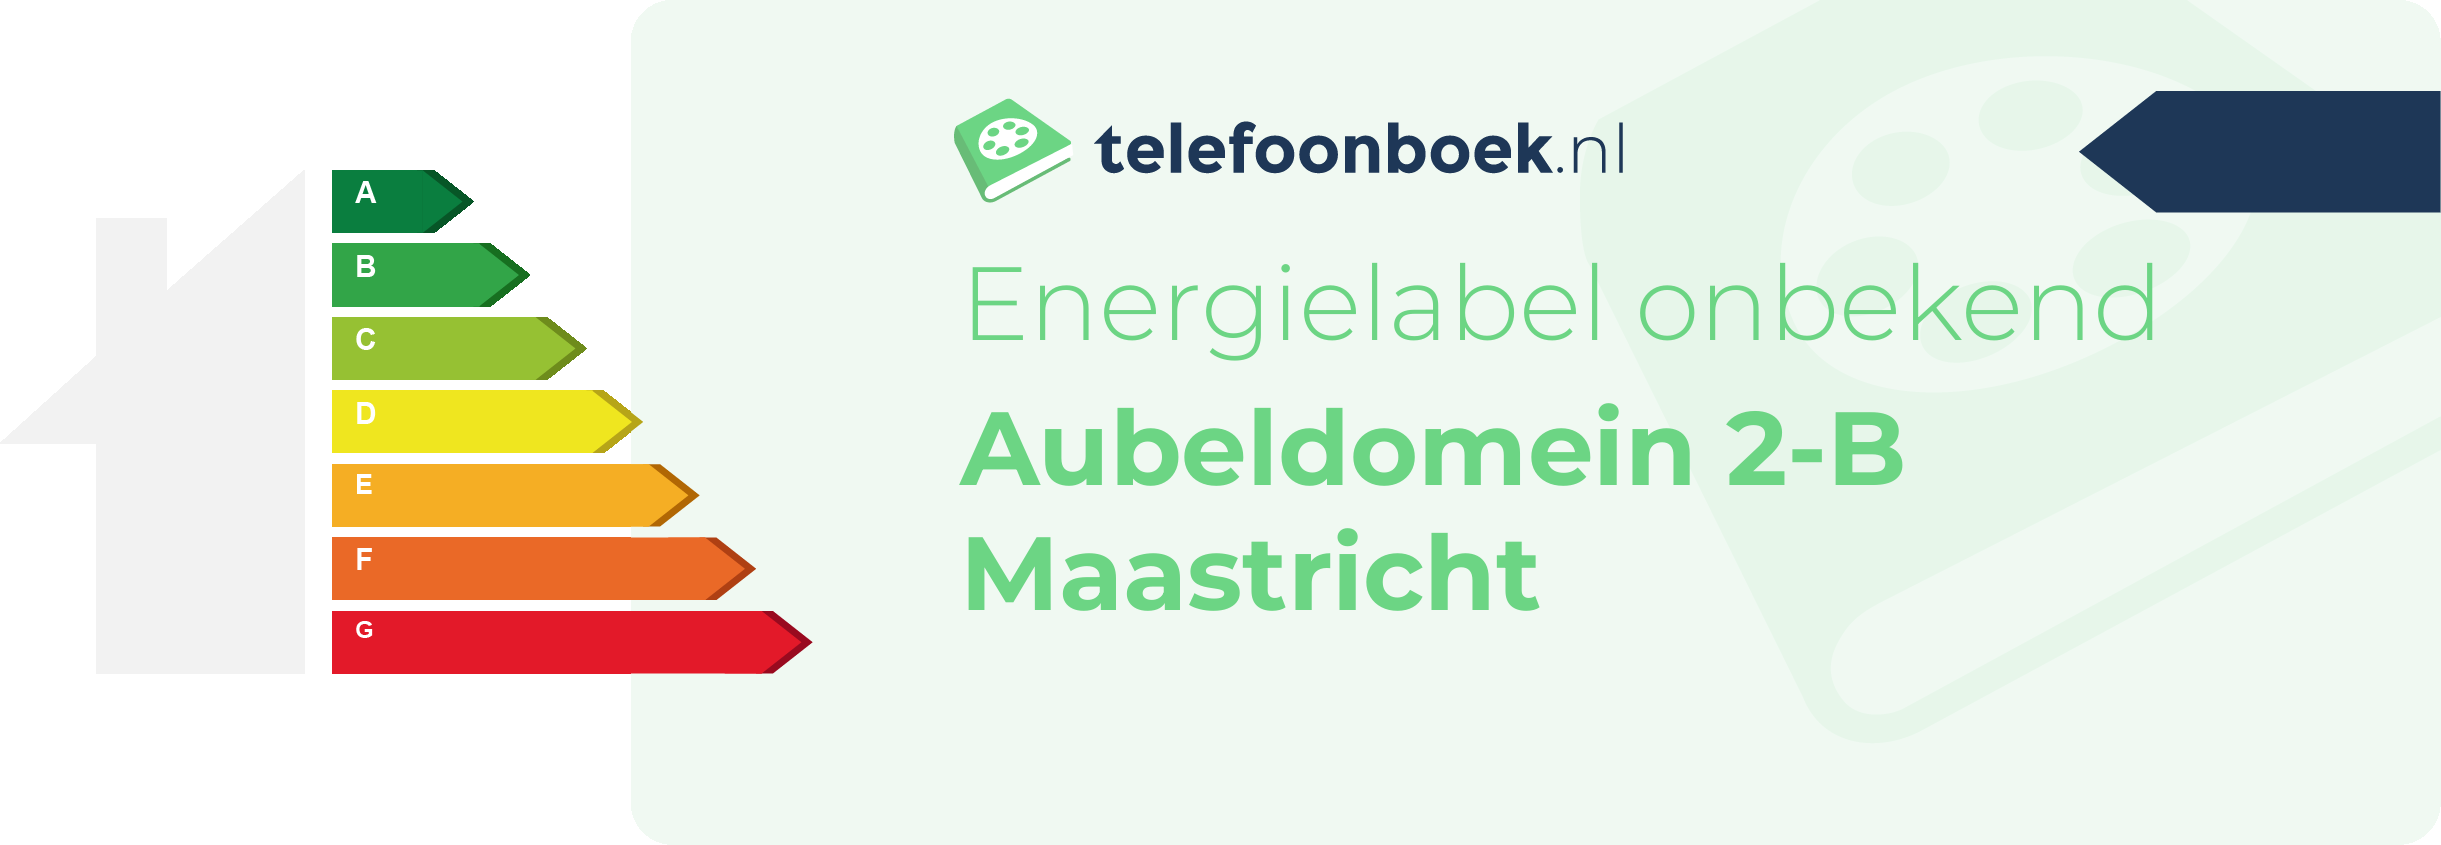 Energielabel Aubeldomein 2-B Maastricht